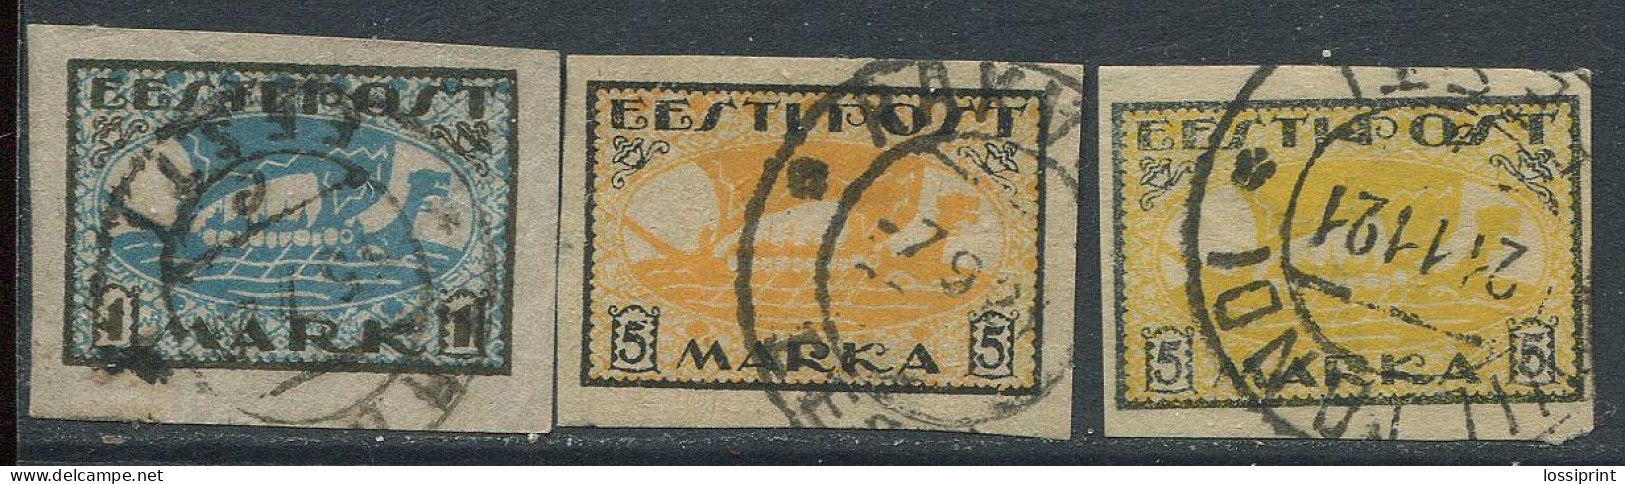 Estonia:Used Stamps Viking Ships 1919 - Estonia